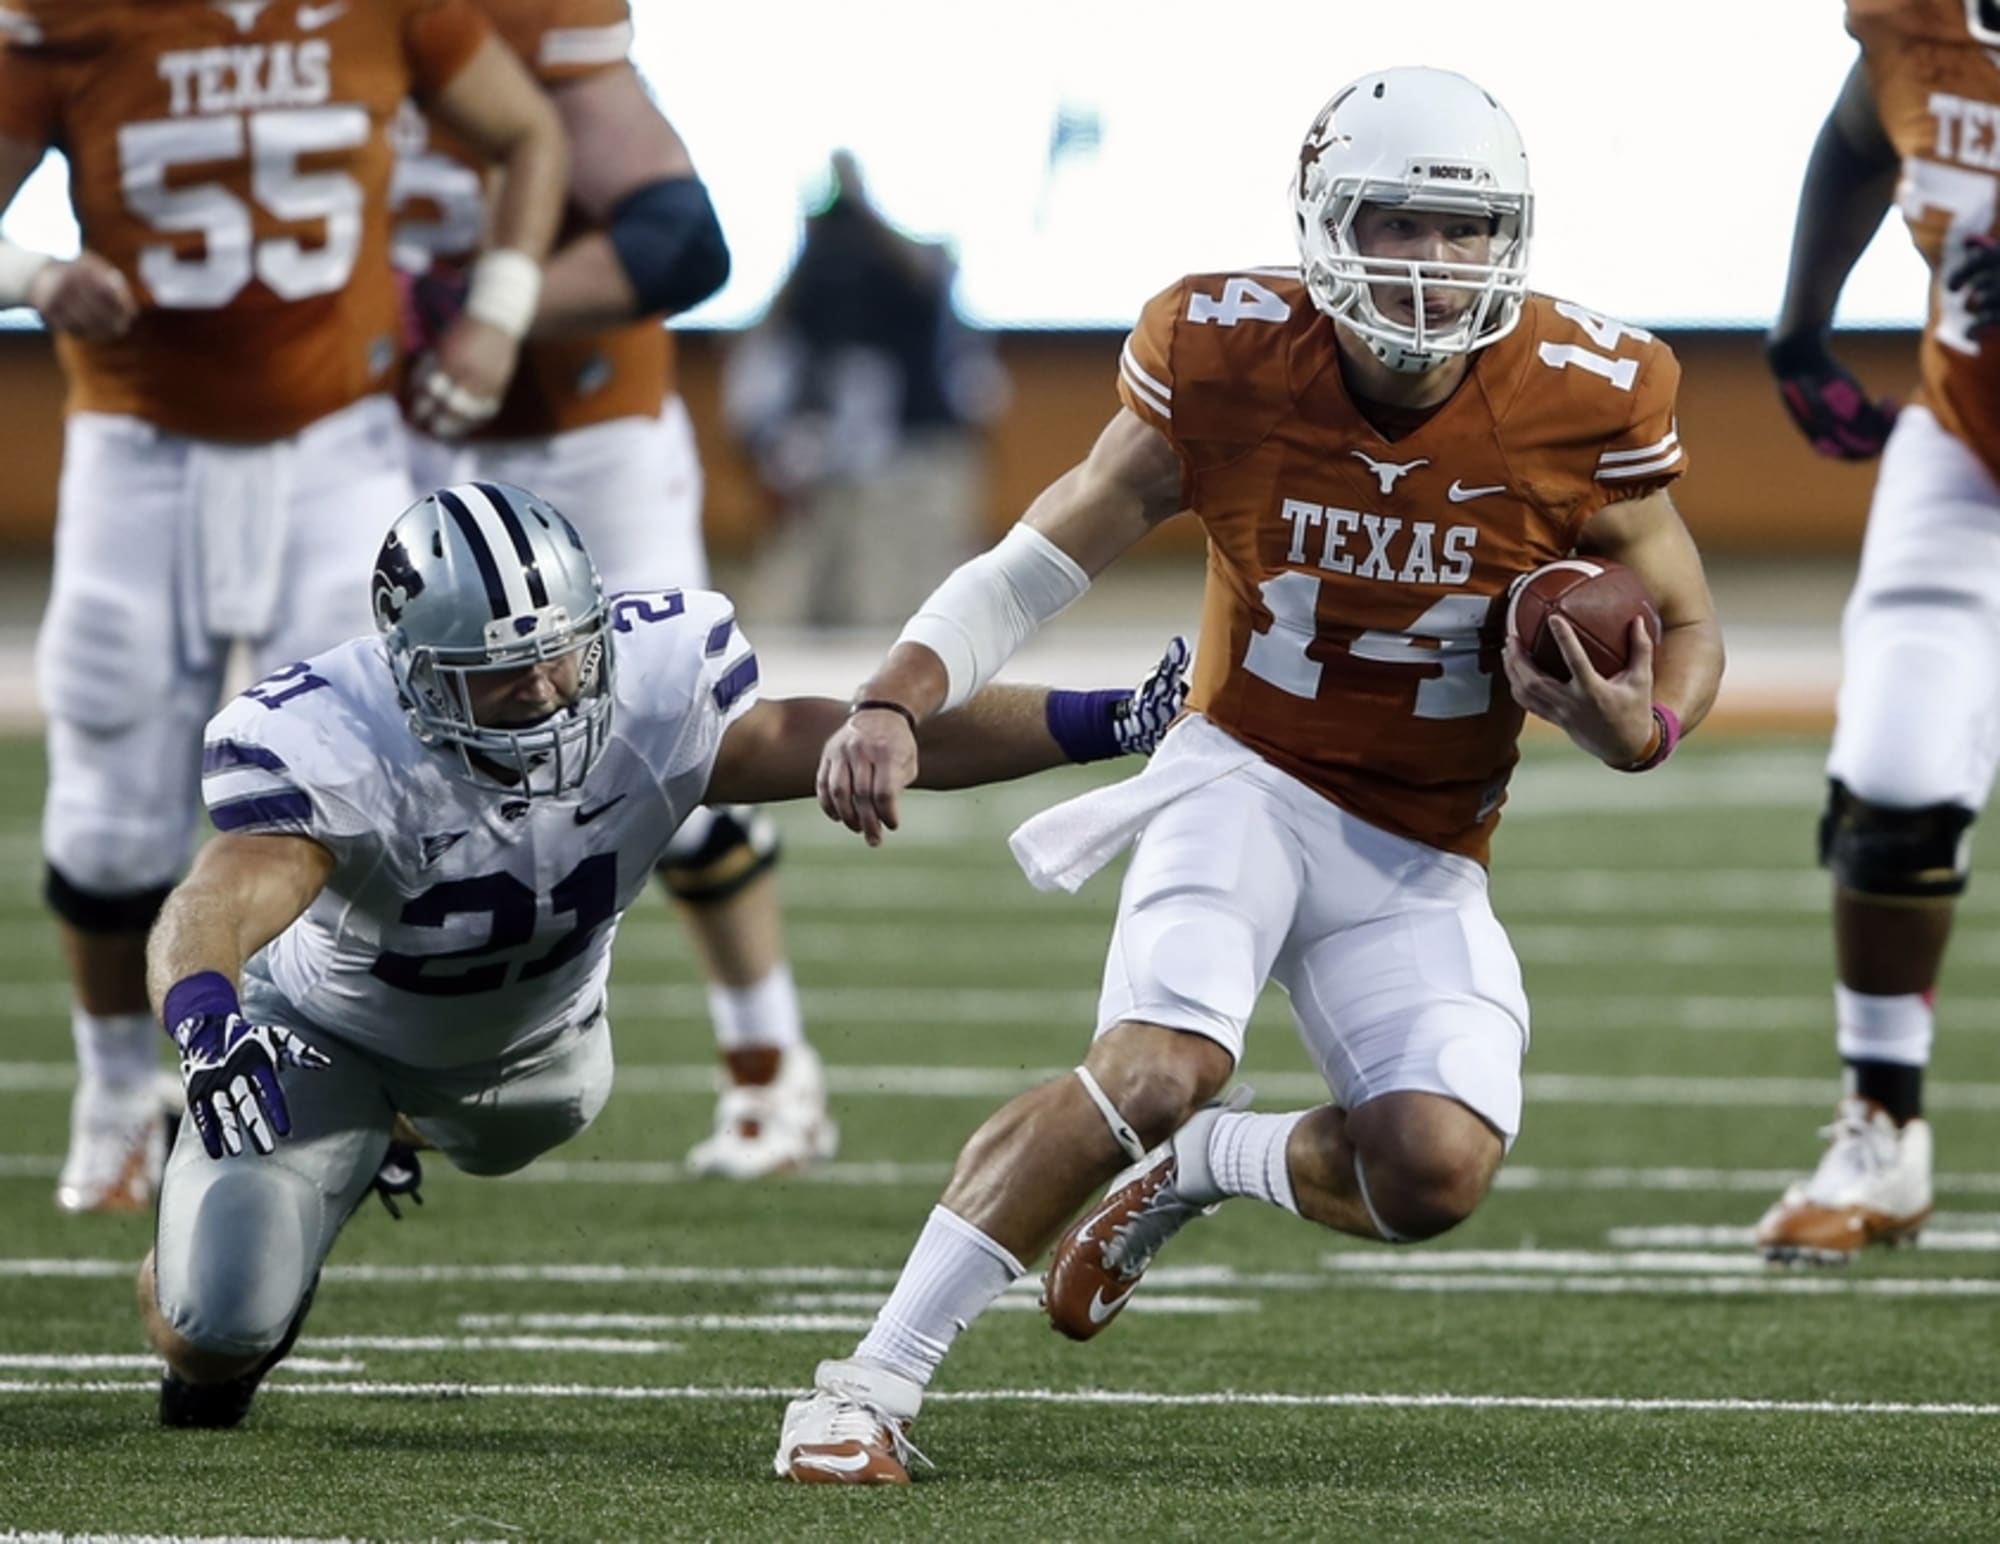 Charlie Strong names David Ash as Texas' starting quarterback